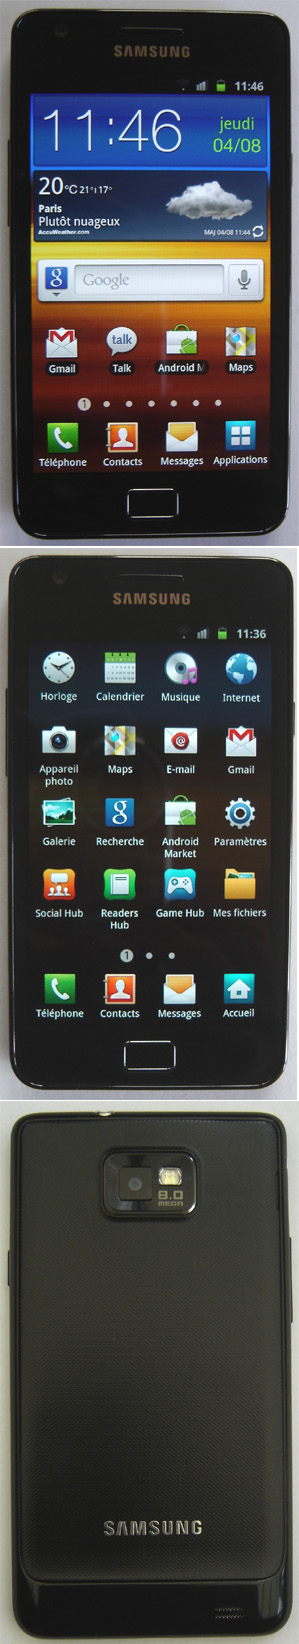 Téléphone Samsung Galaxy S II